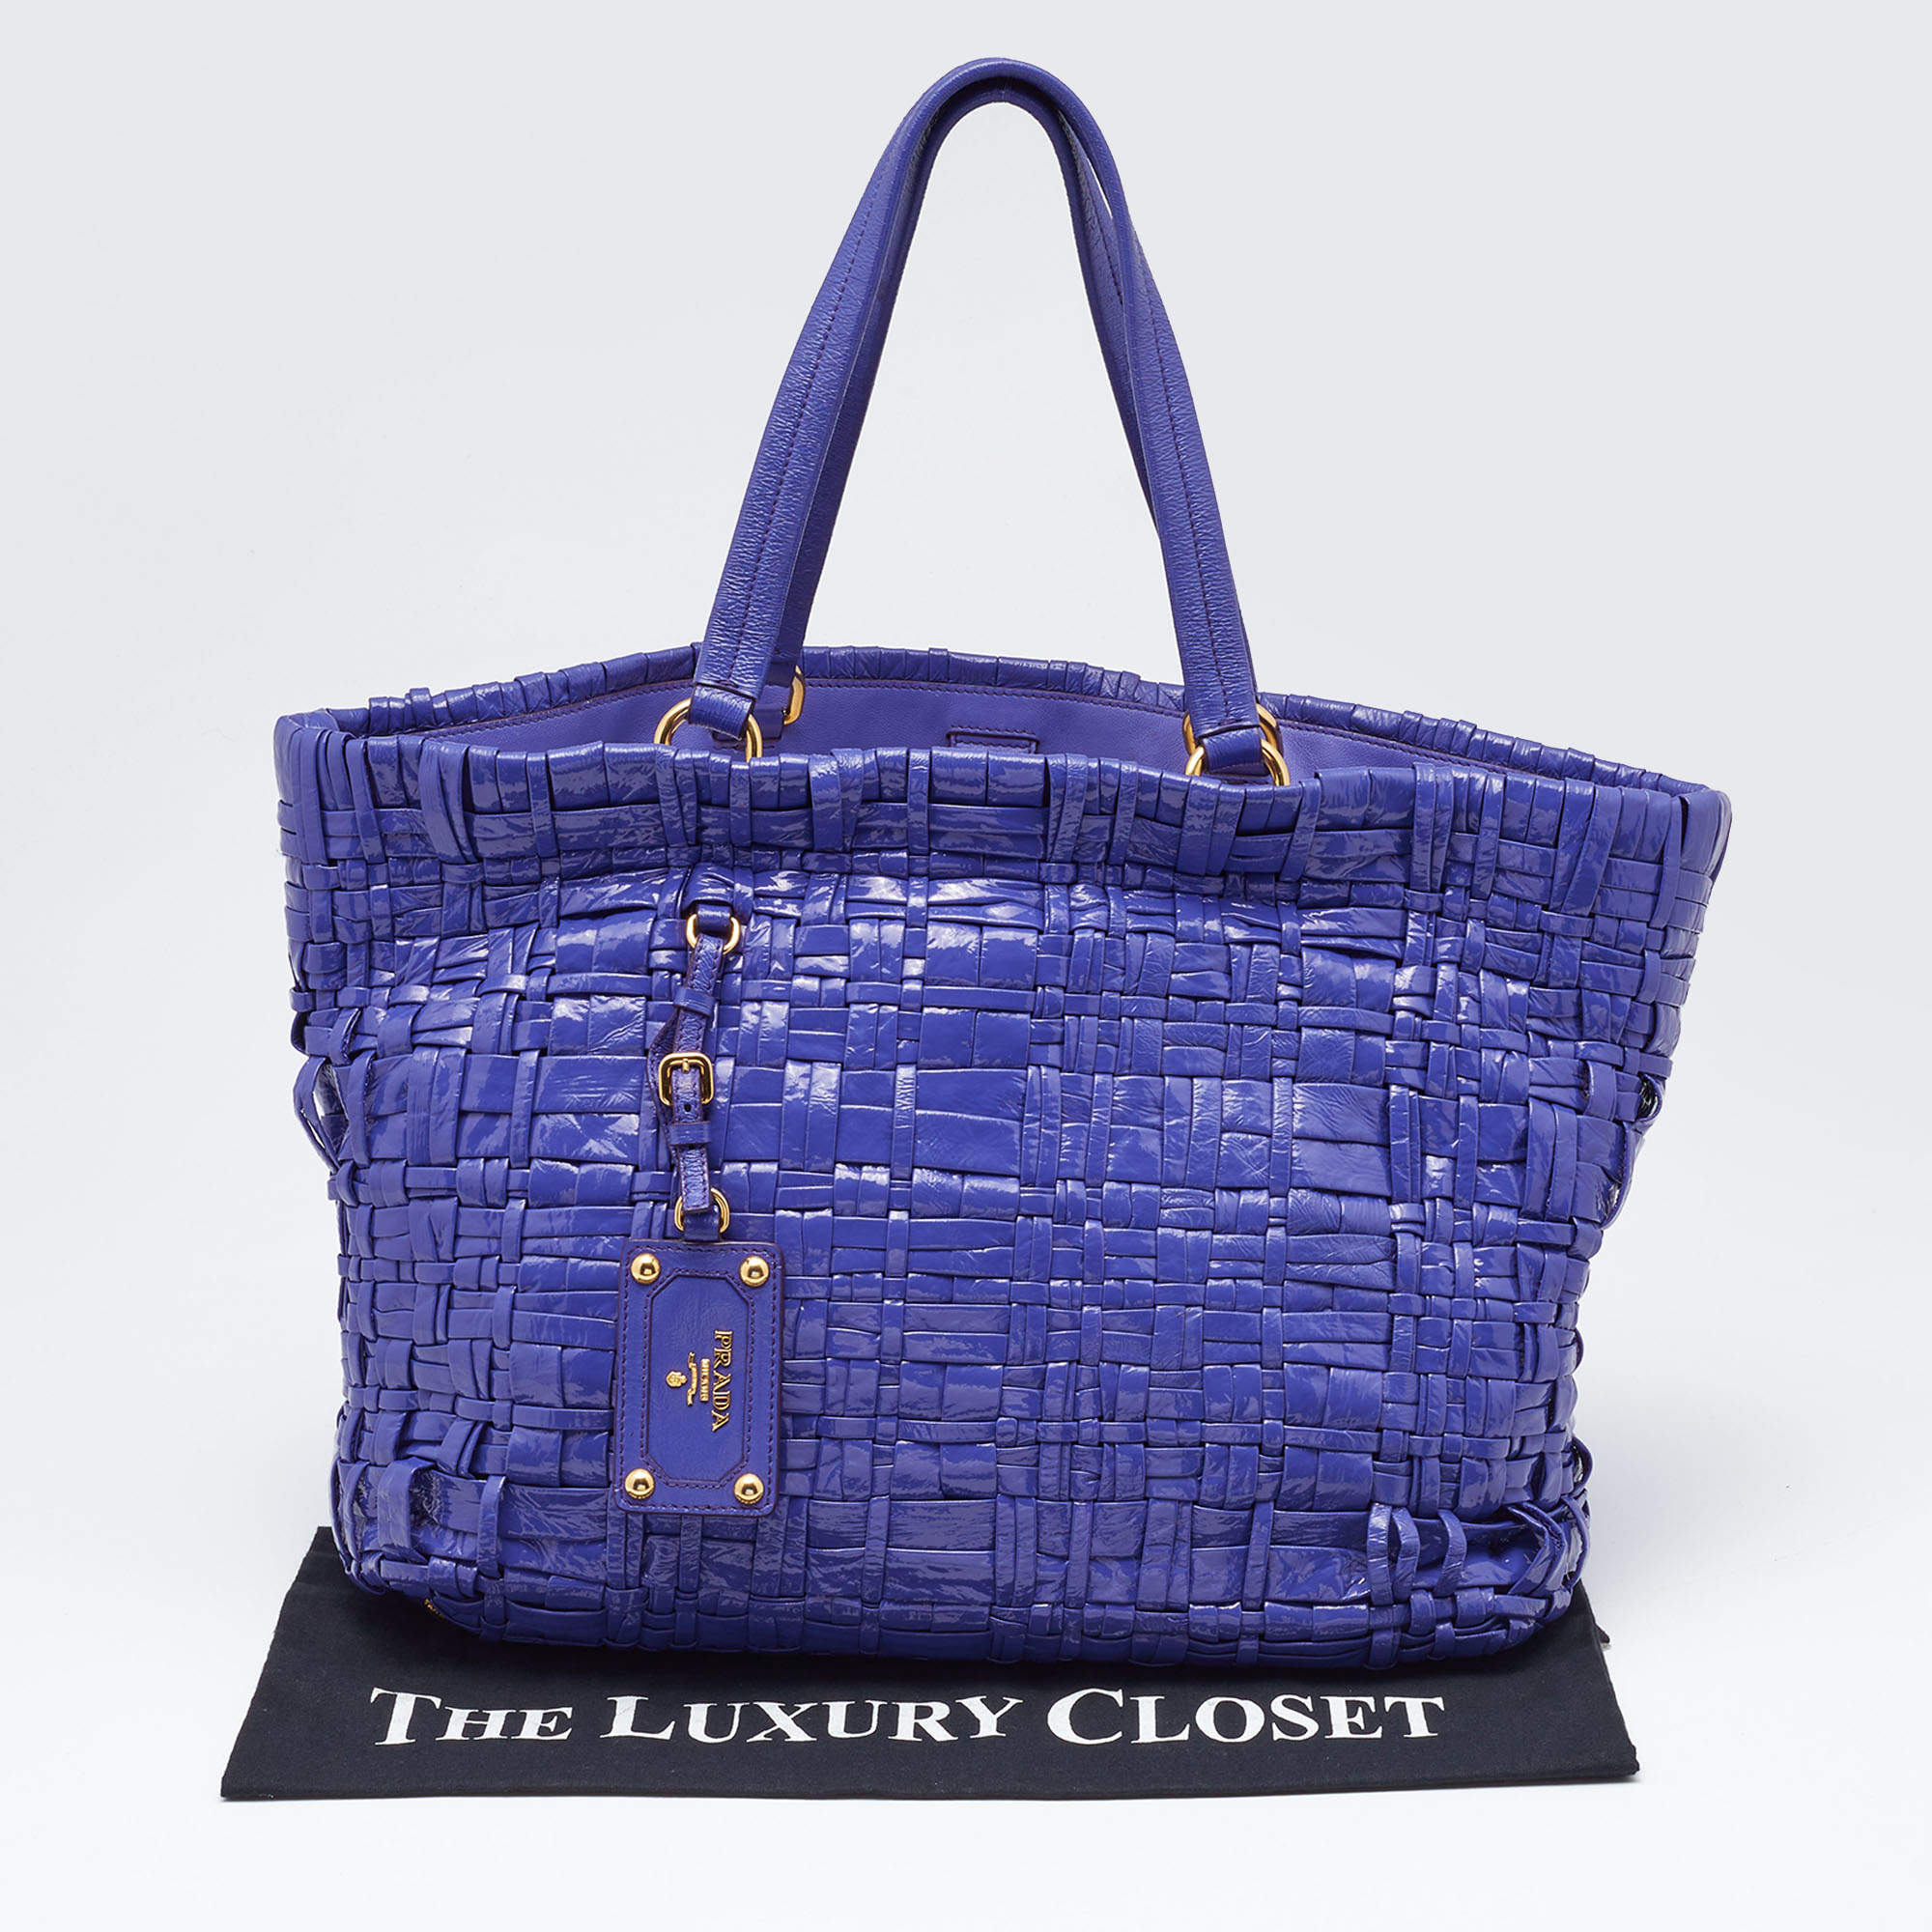 Prada Purple Crocodile Bag